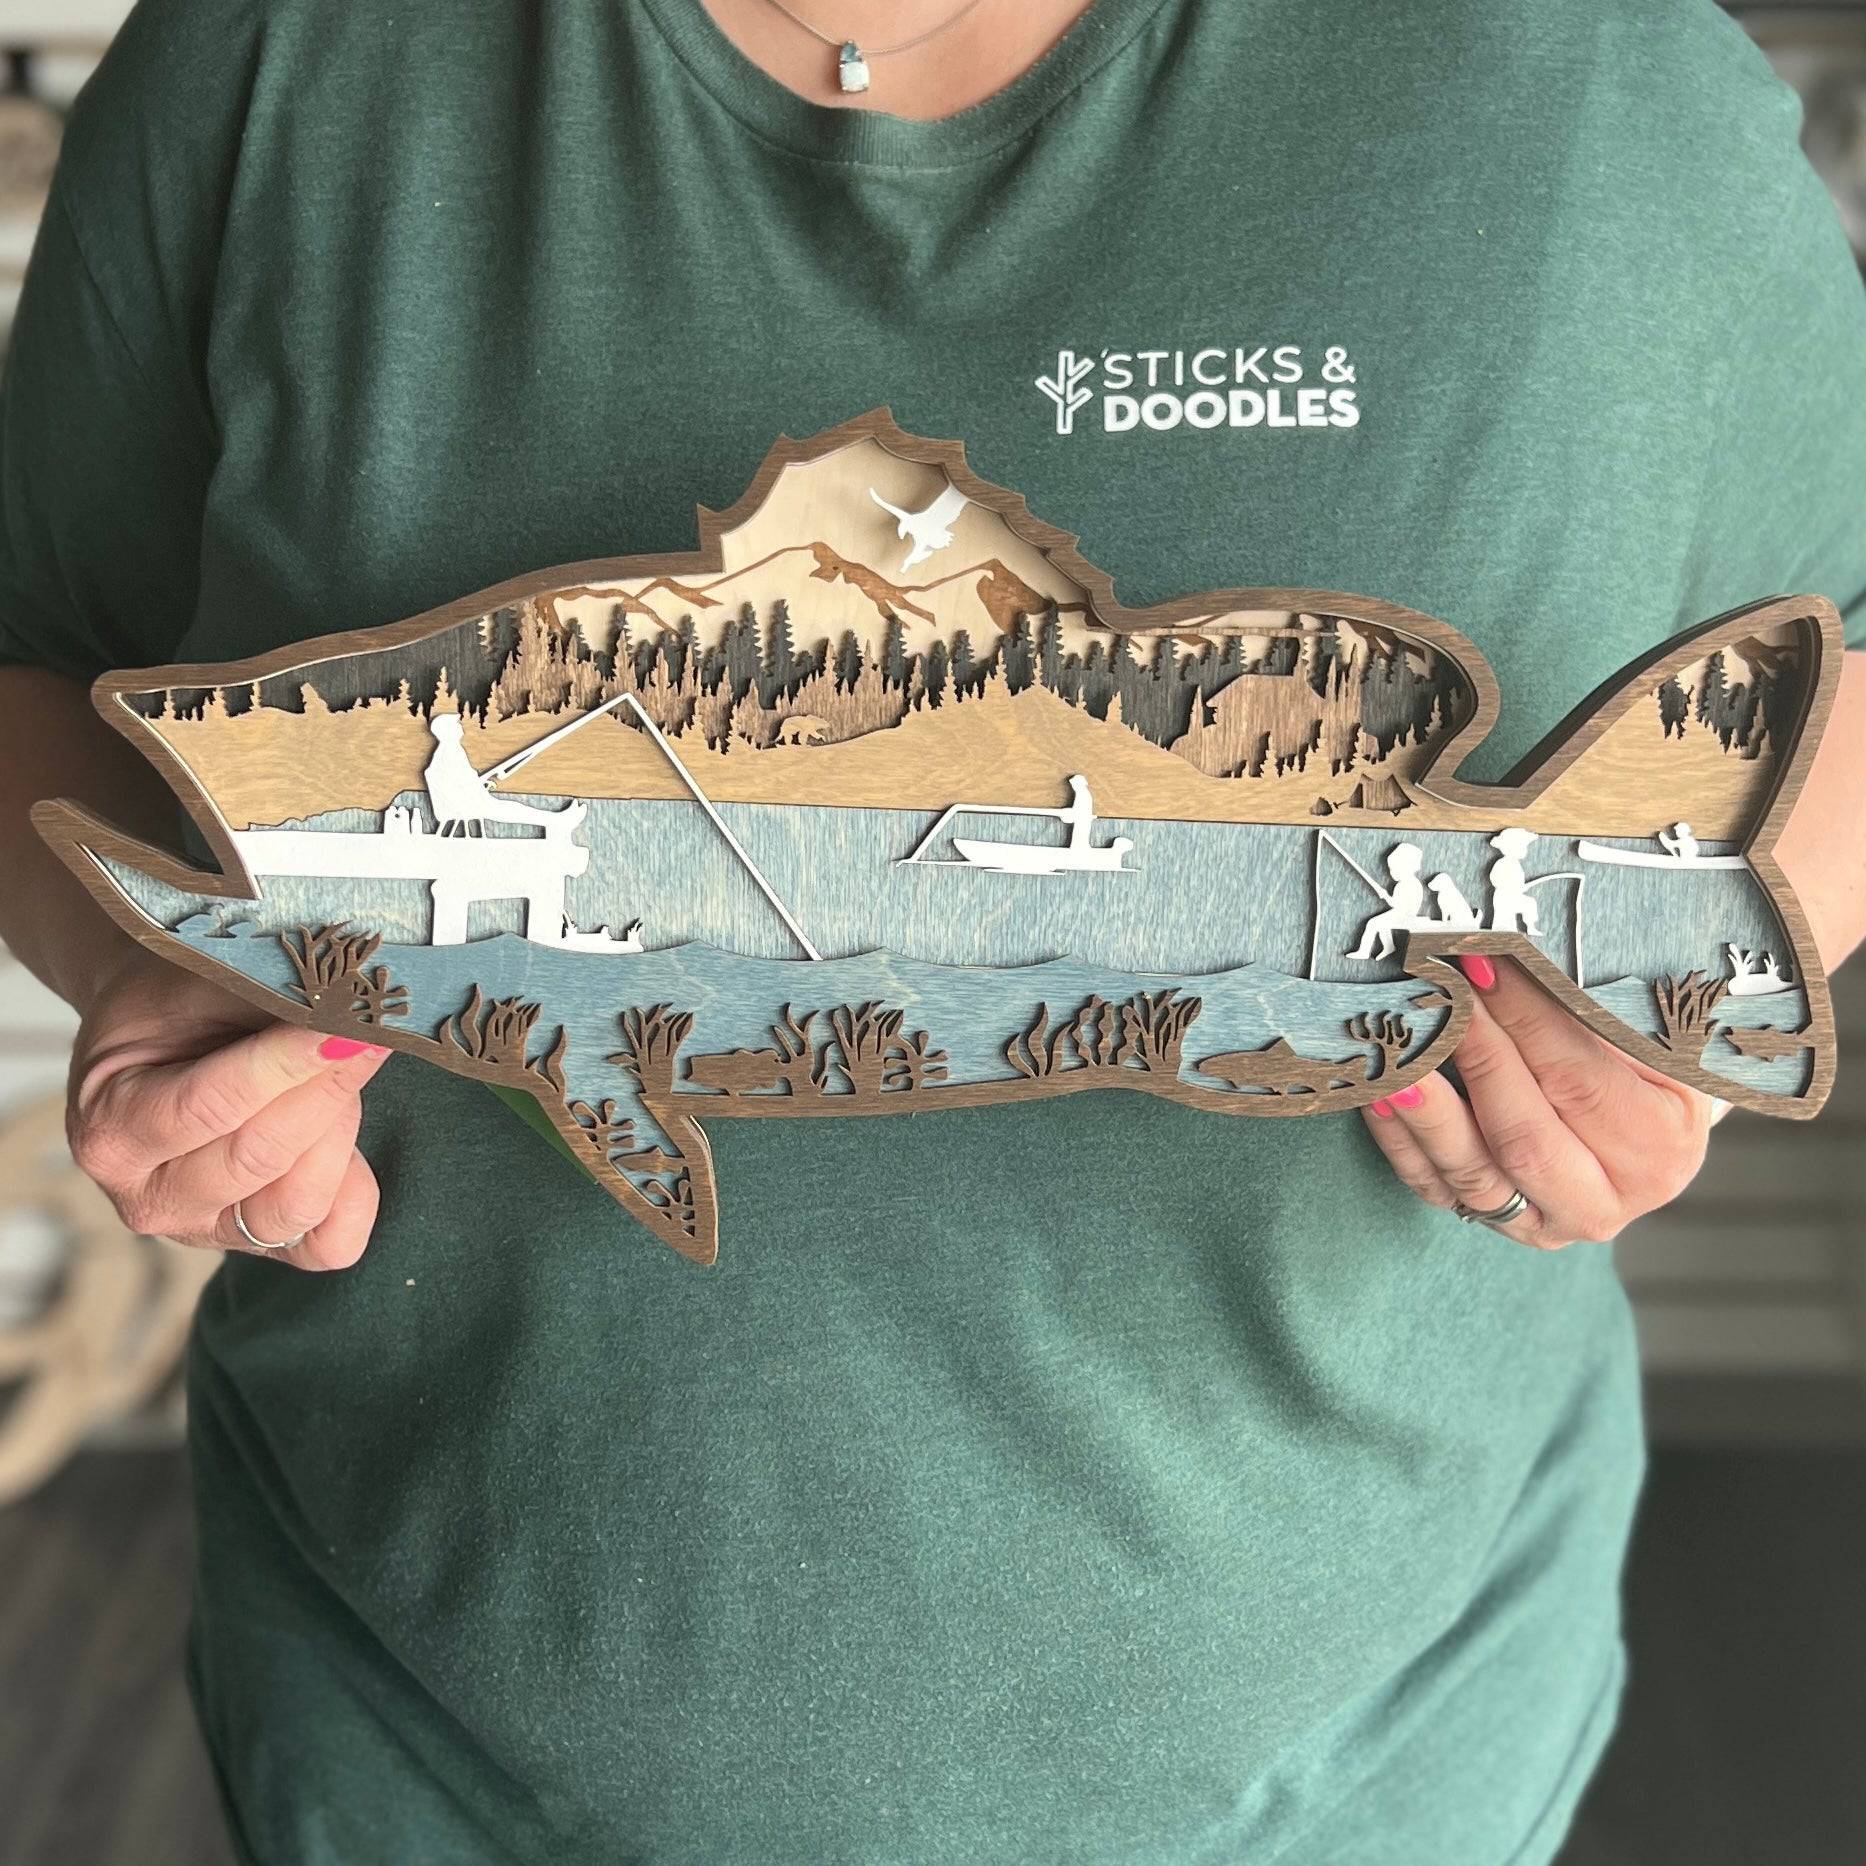 Largemouth Bass Fish Multilayer Sign - Sticks & Doodles